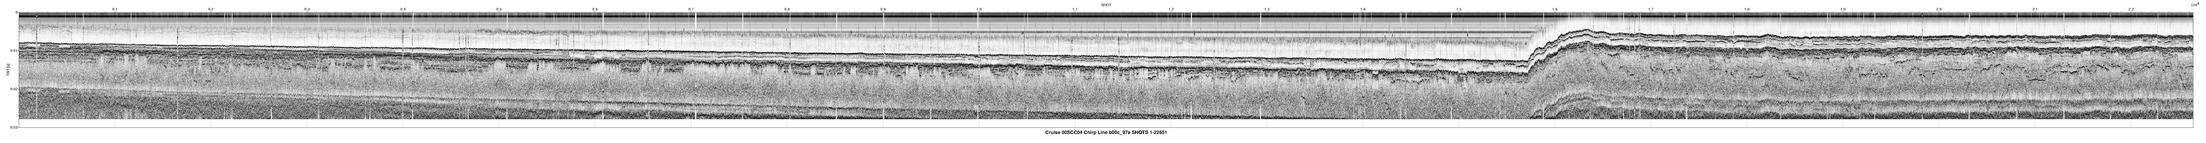 00SCC04 b00c_97a seismic profile image